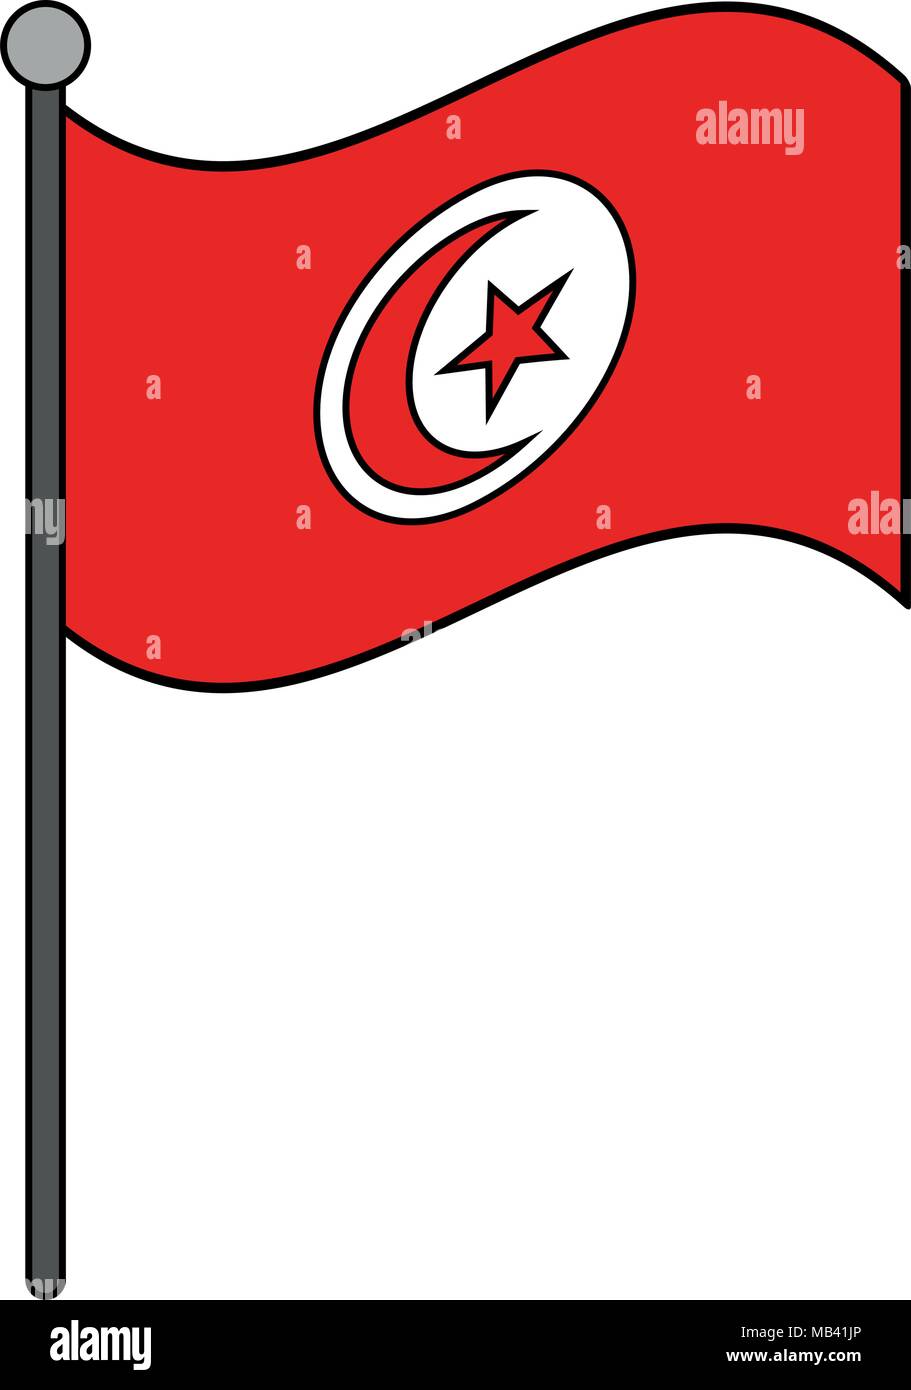 Tunesien Flagge Stock Vektorgrafik Alamy